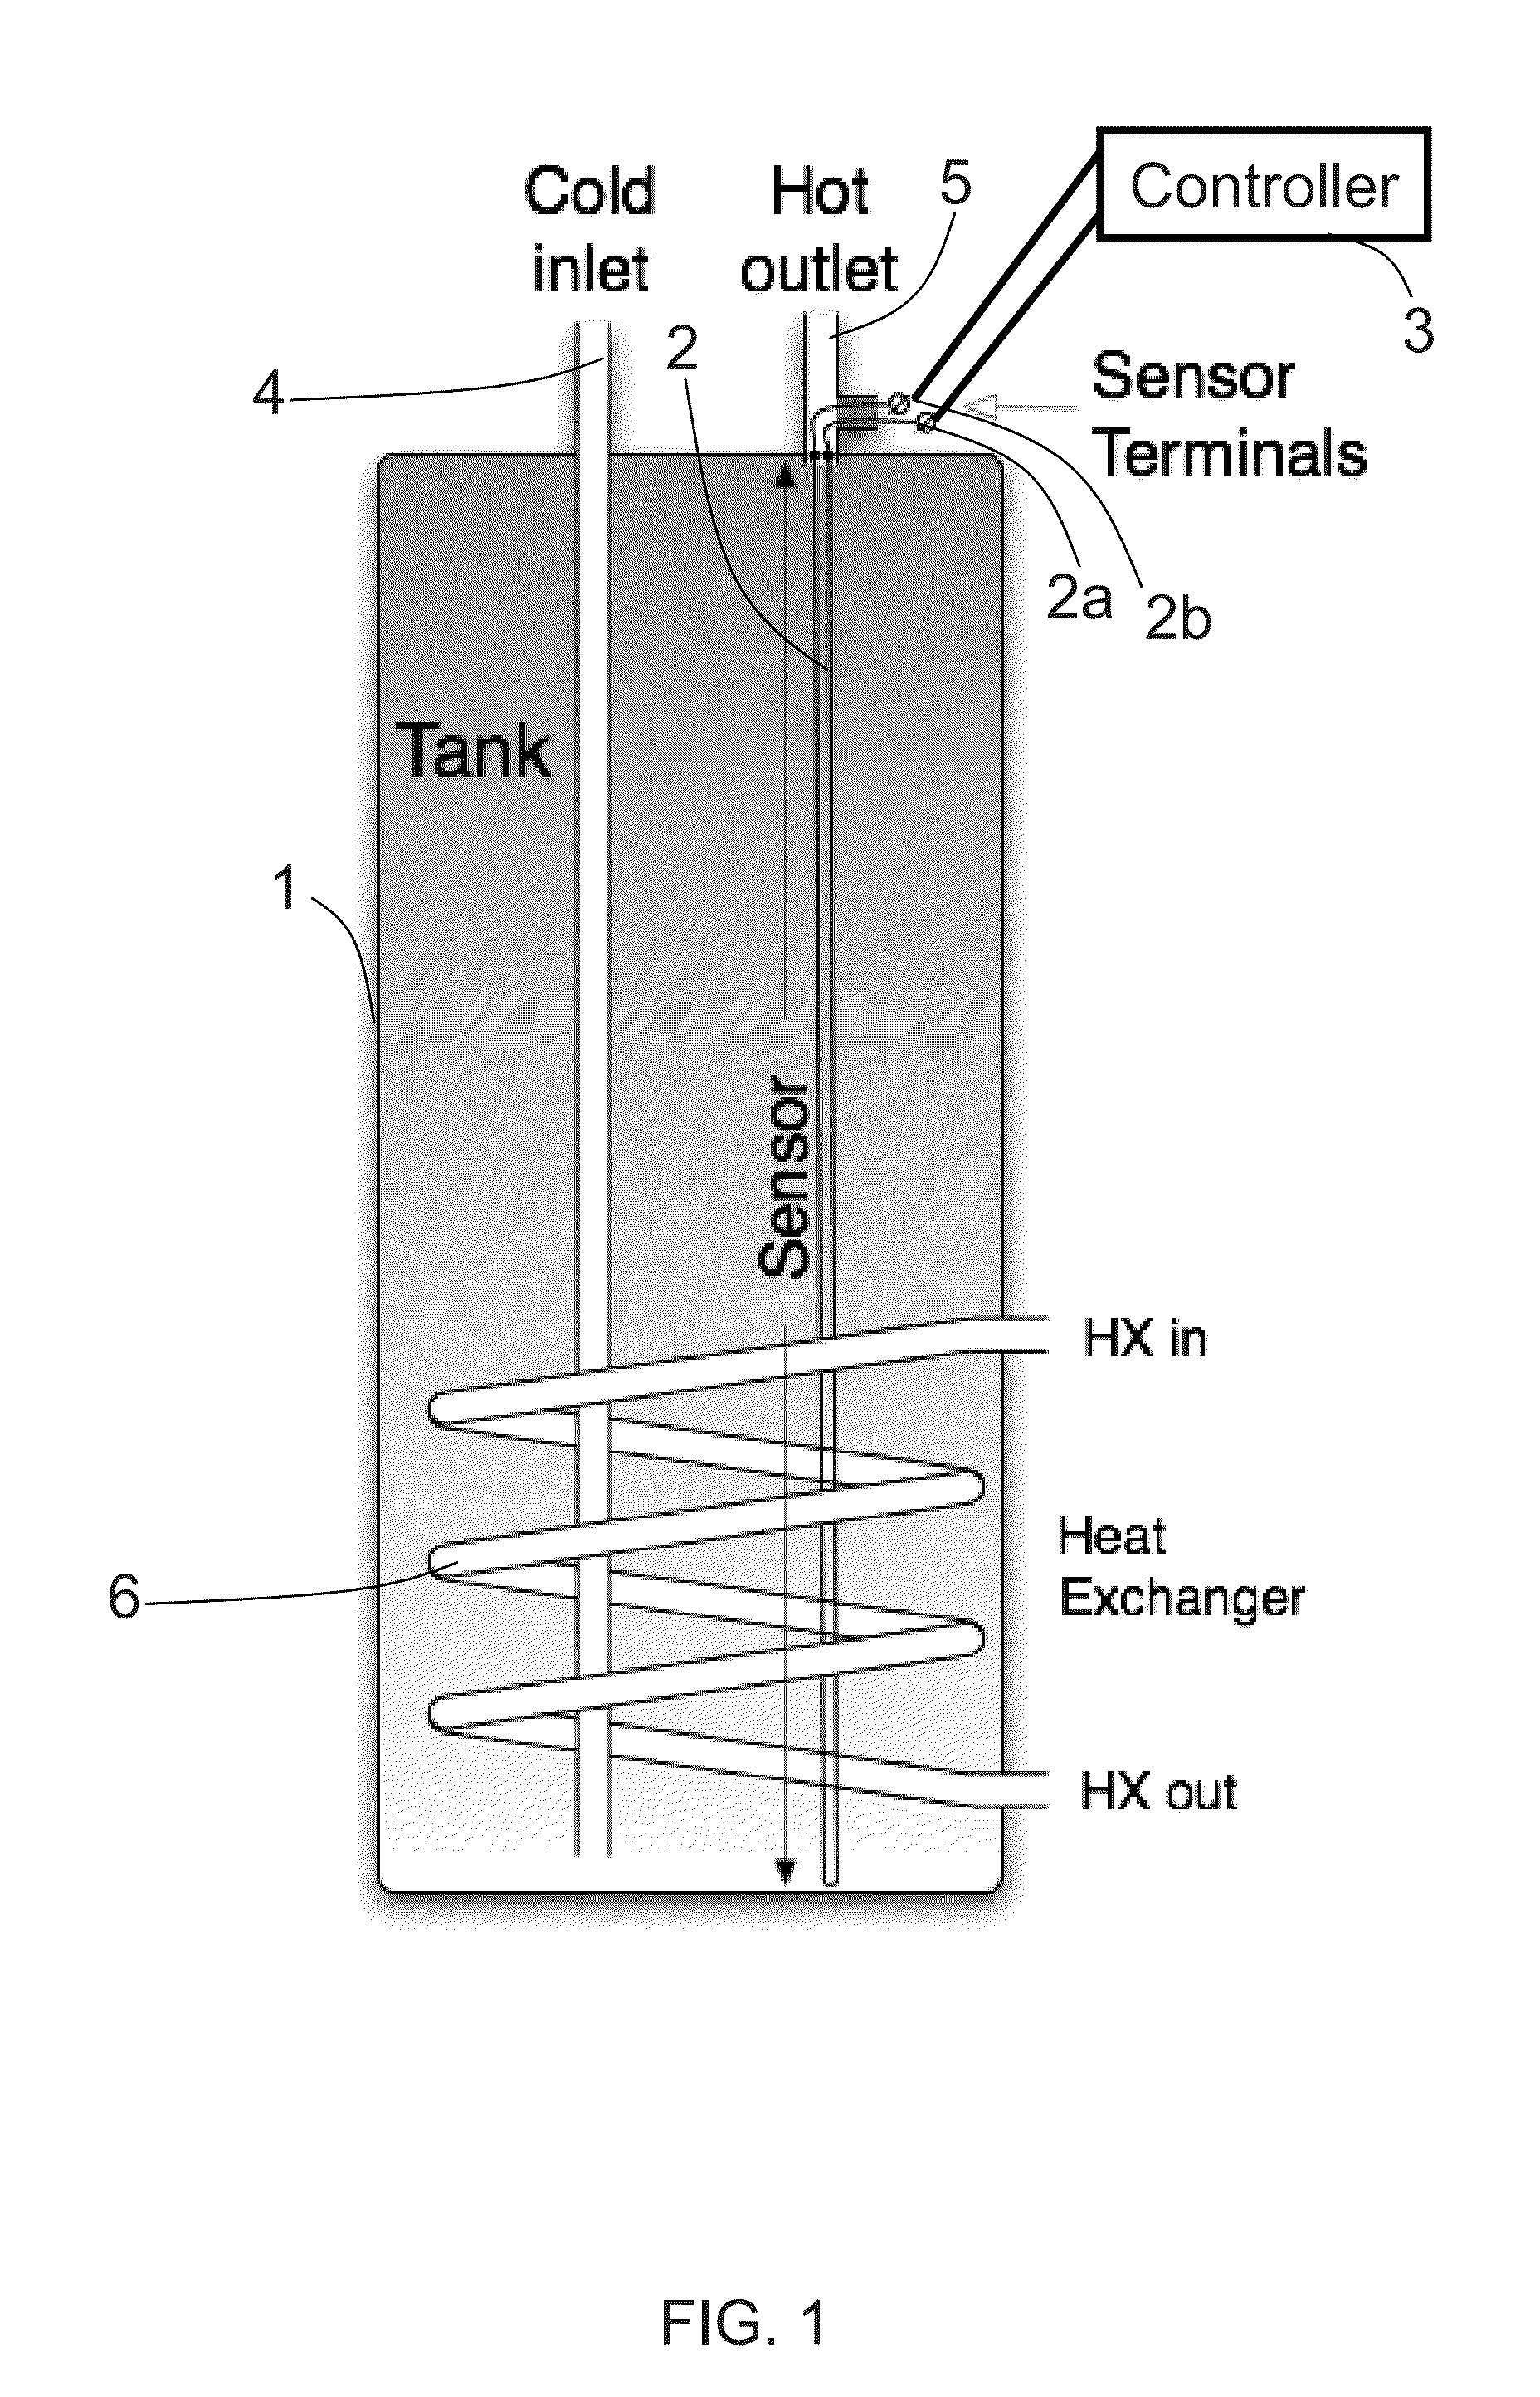 Thermal energy metering by measuring average tank temperature